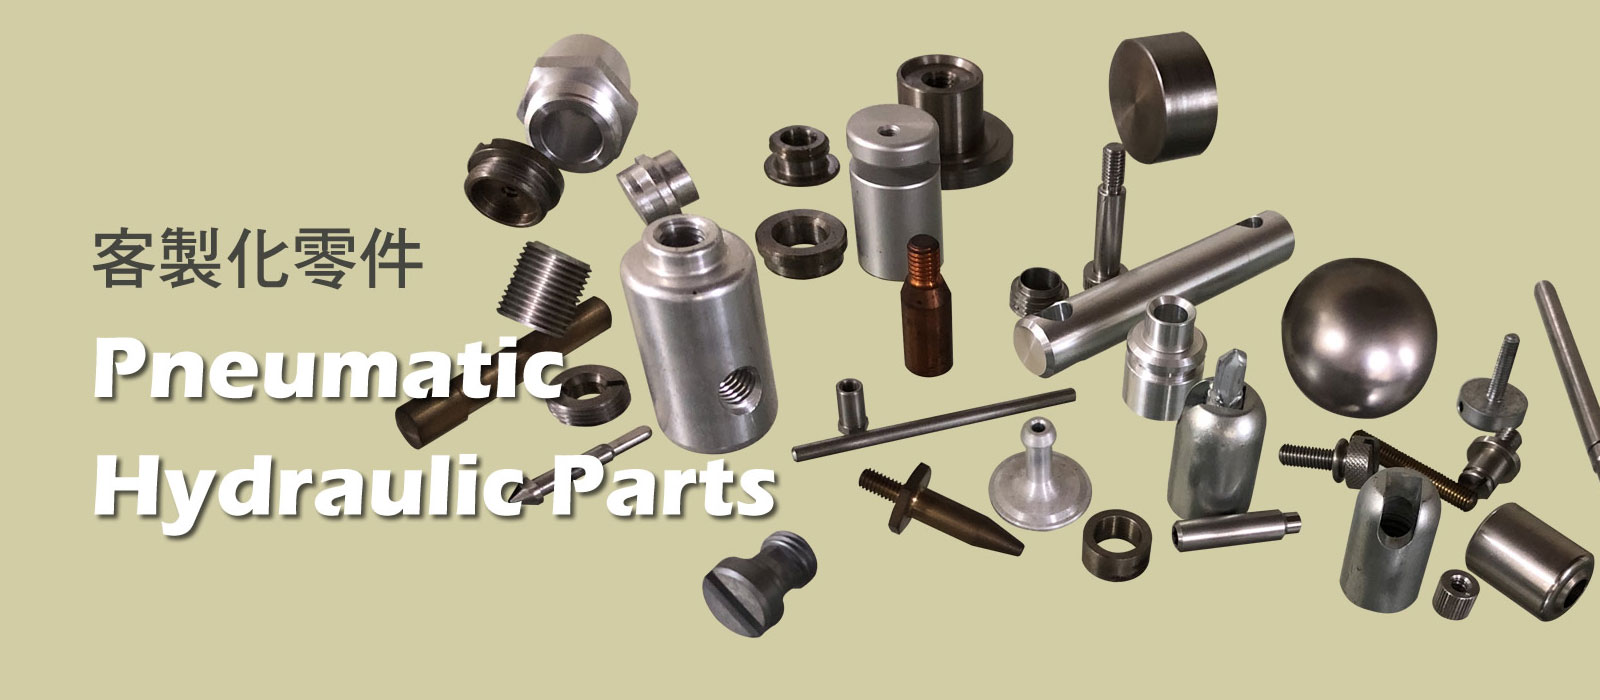 Pneumatic Hydraulic Parts